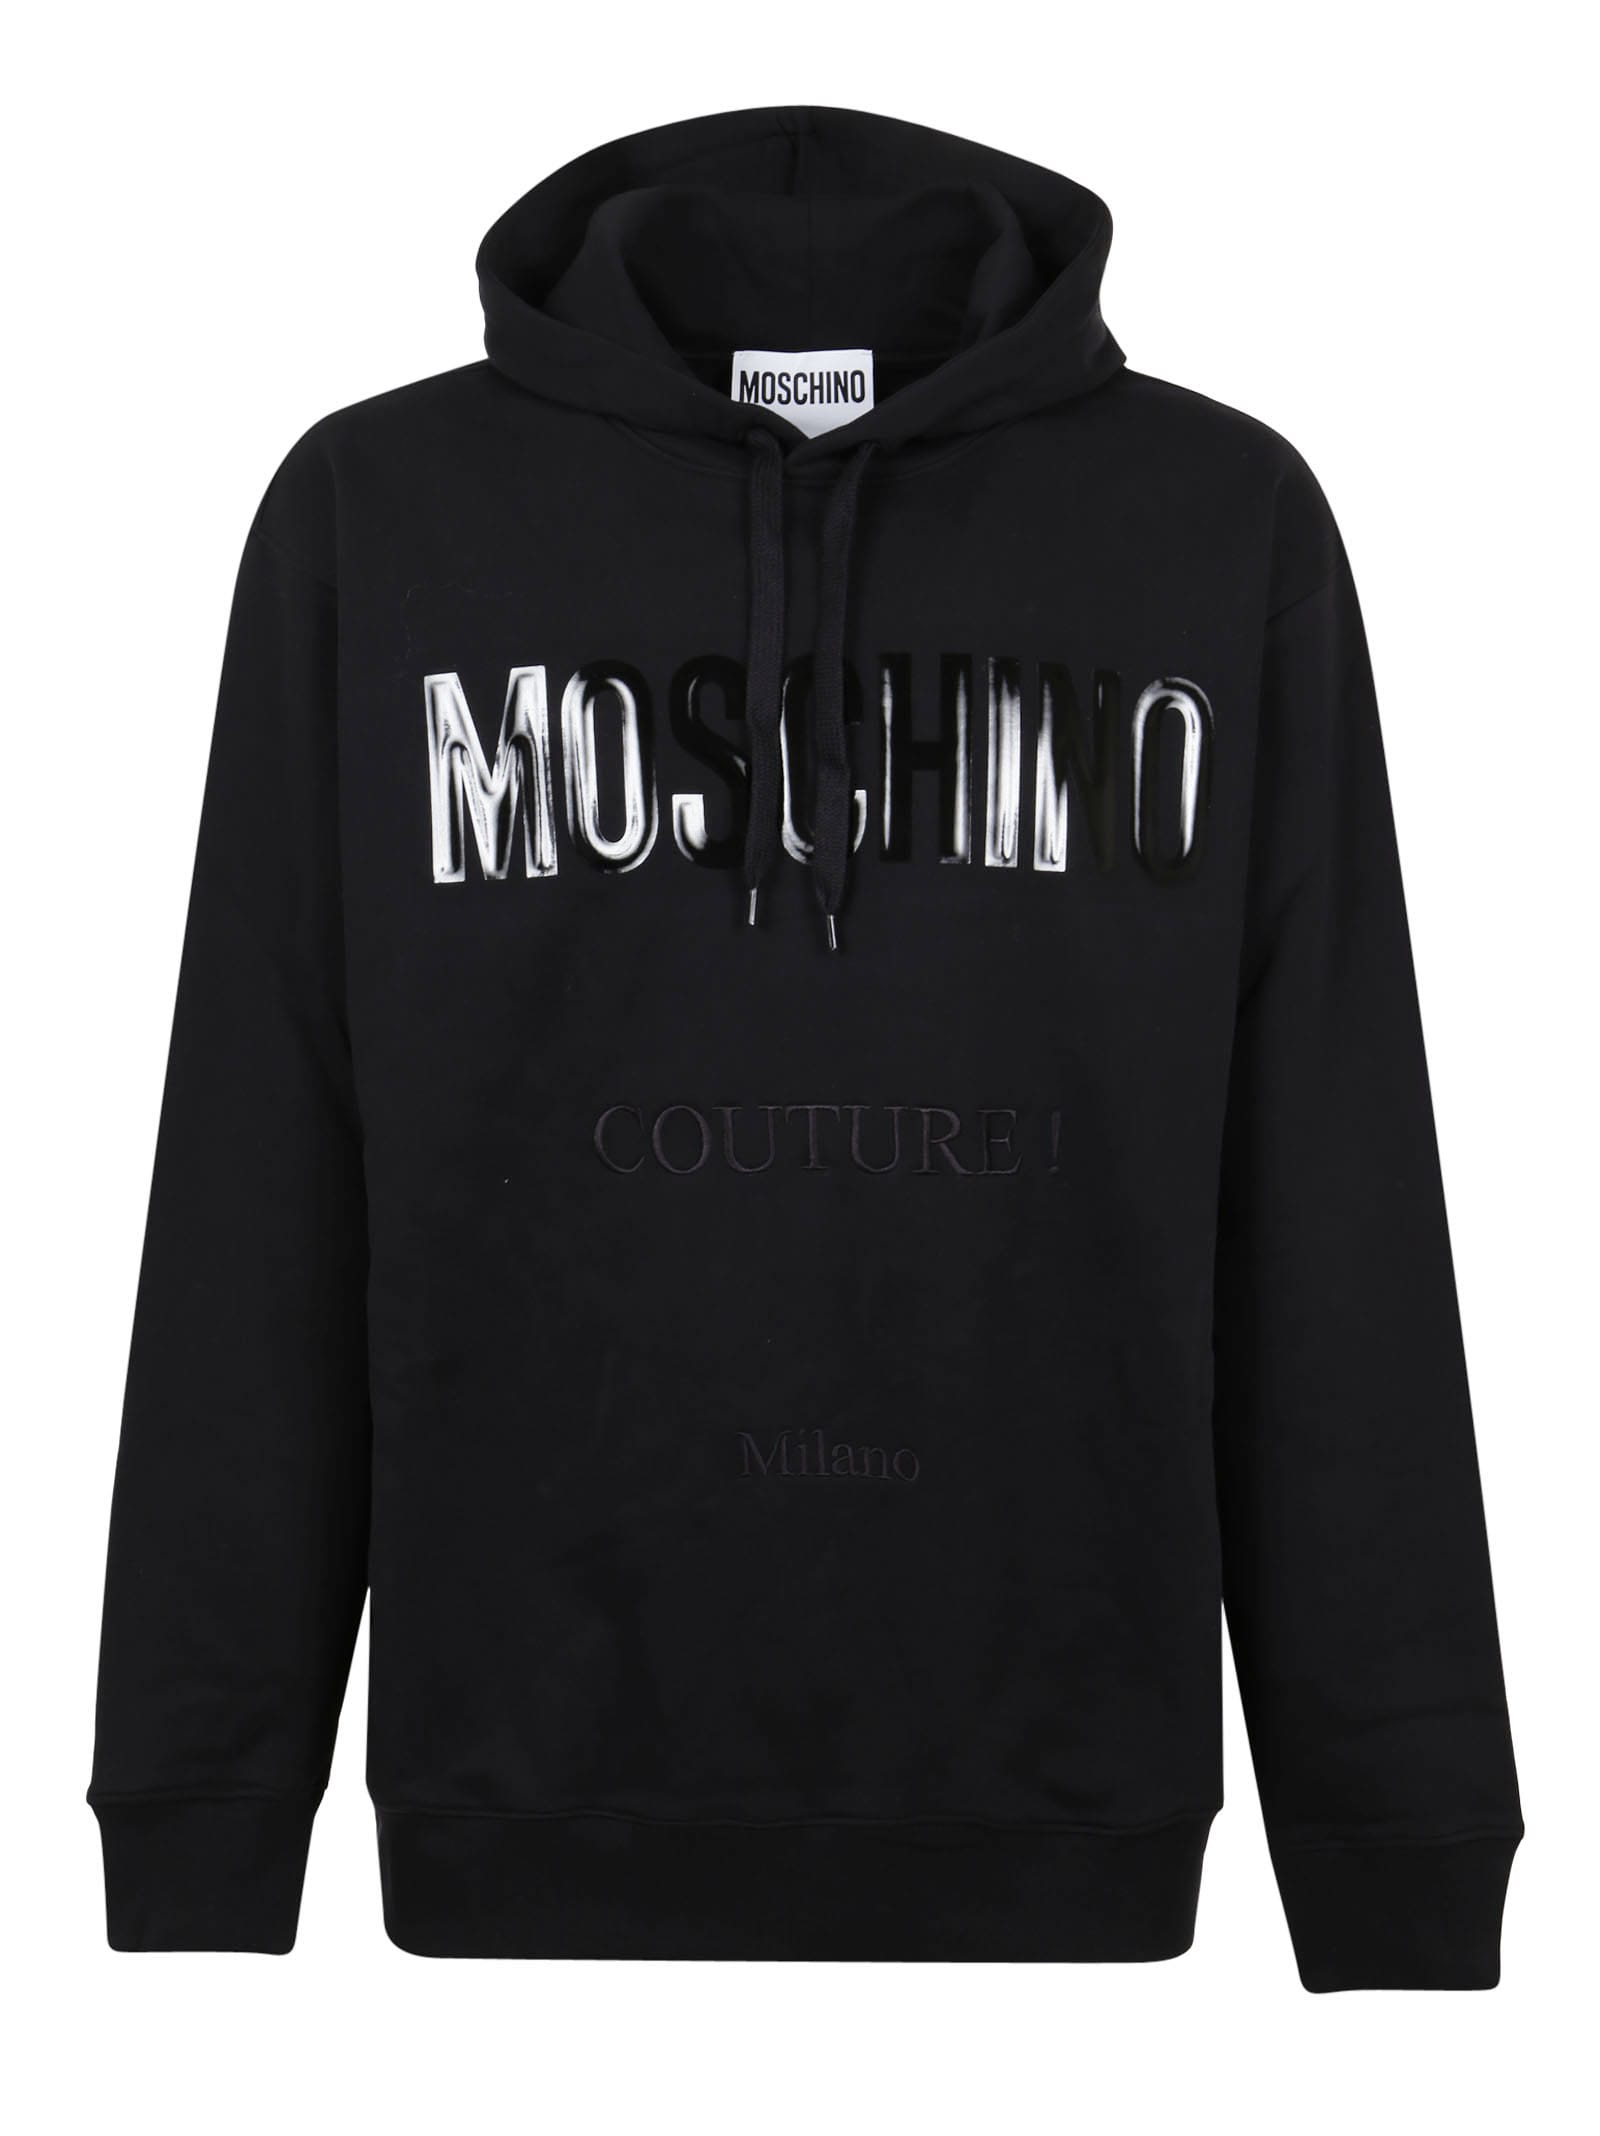 Moschino Vinyl Couture Milano